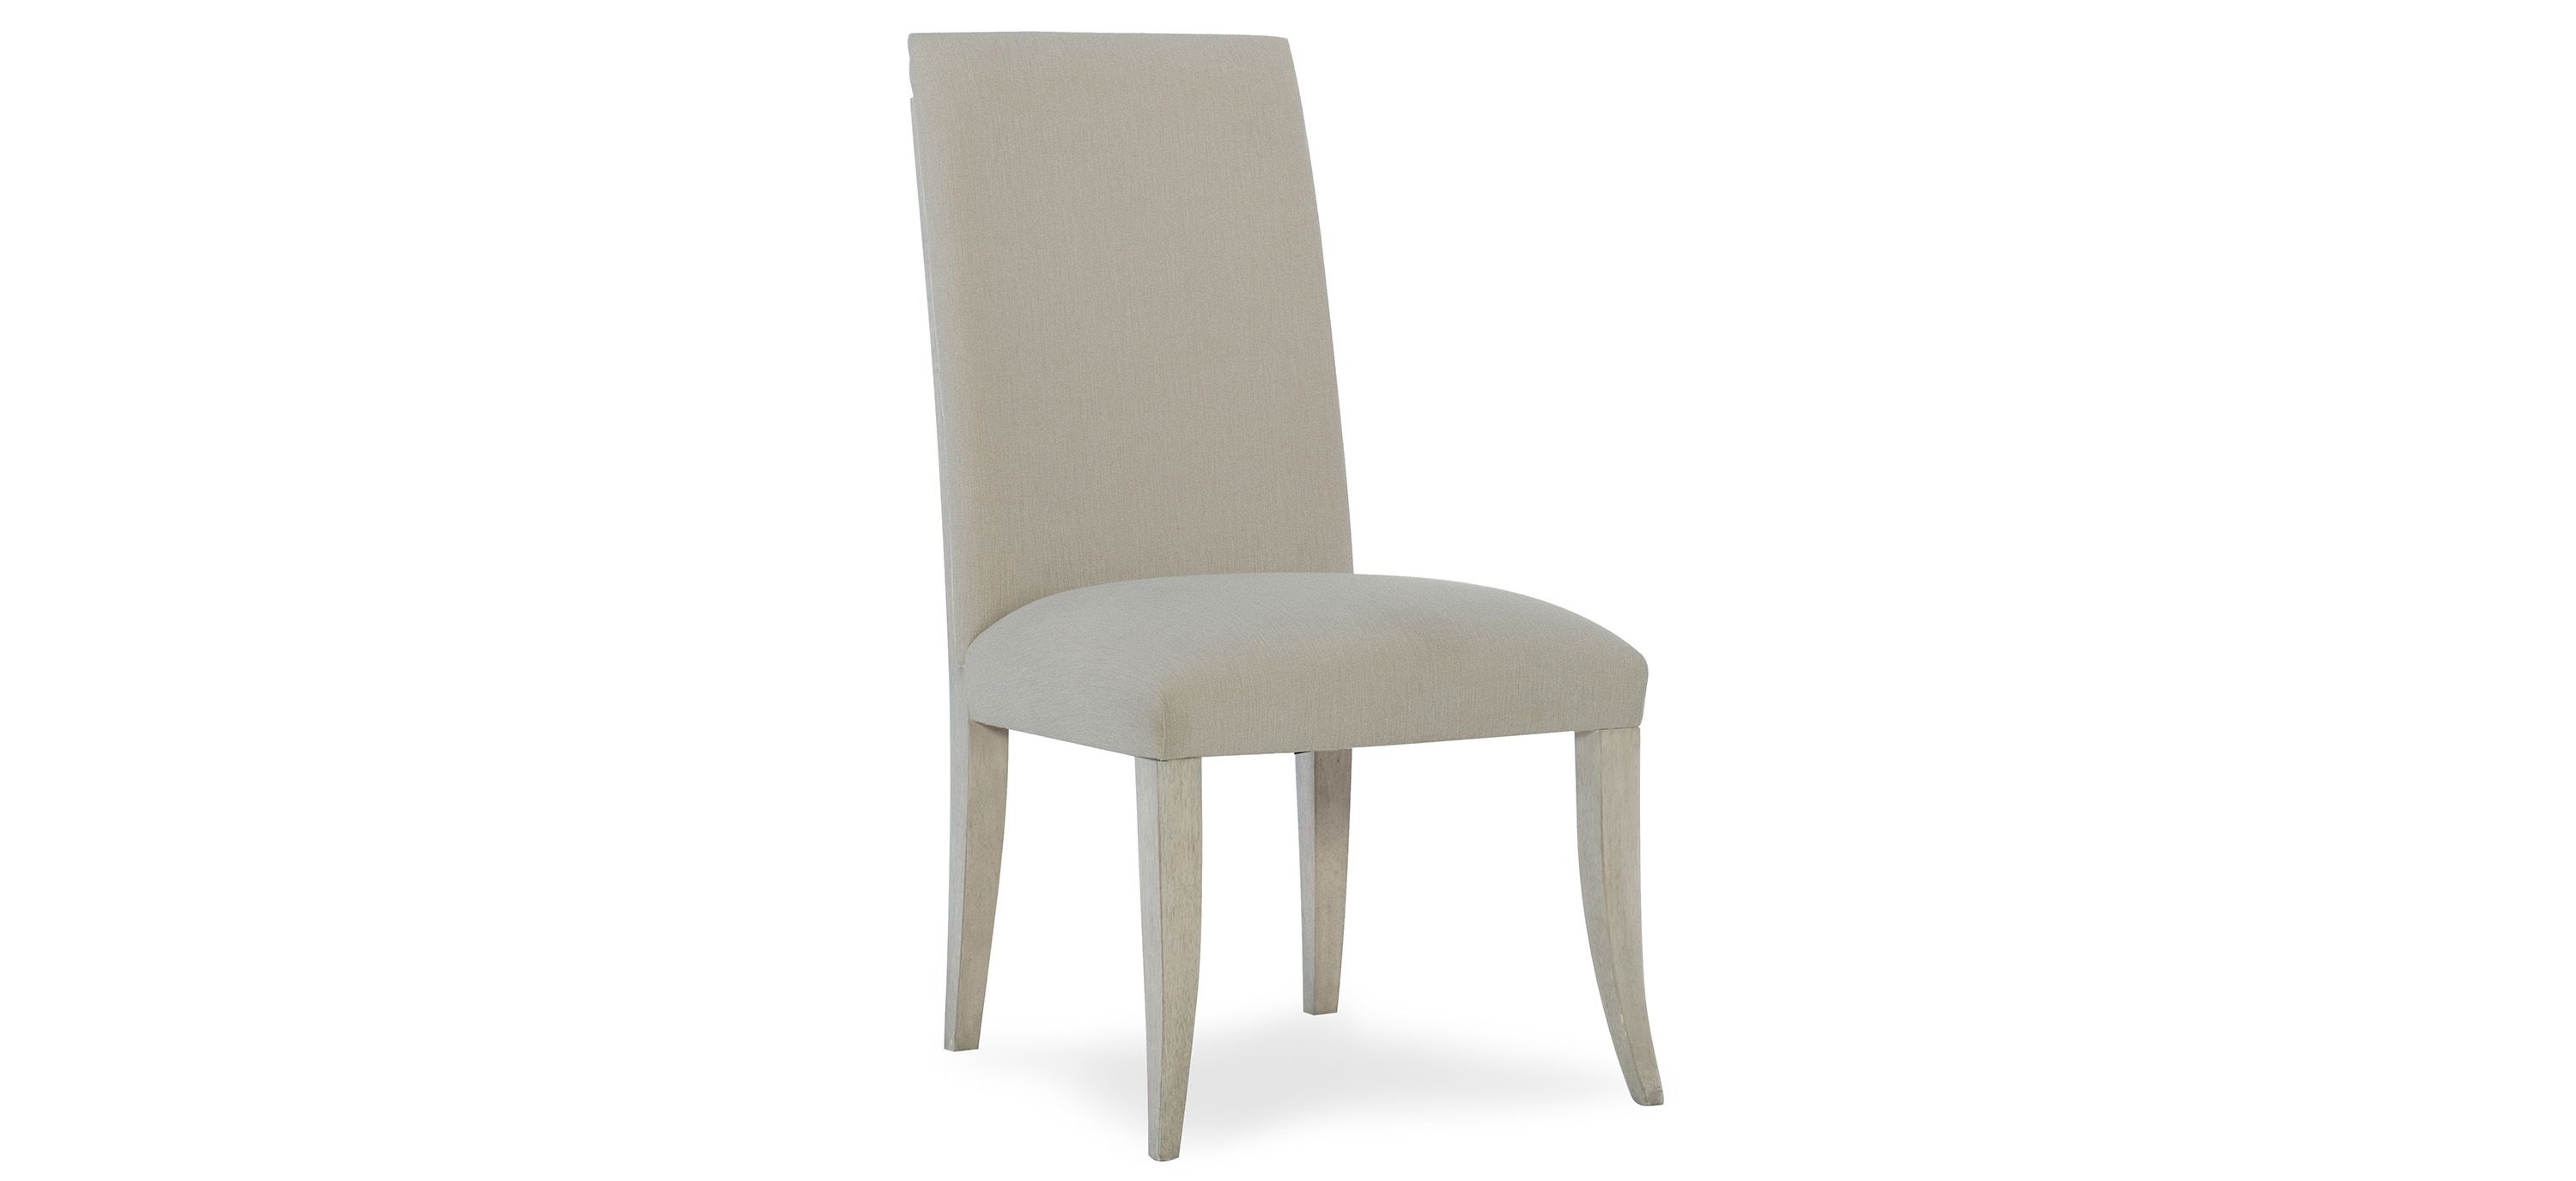 Elixir Upholstered Side Chair - Set of 2